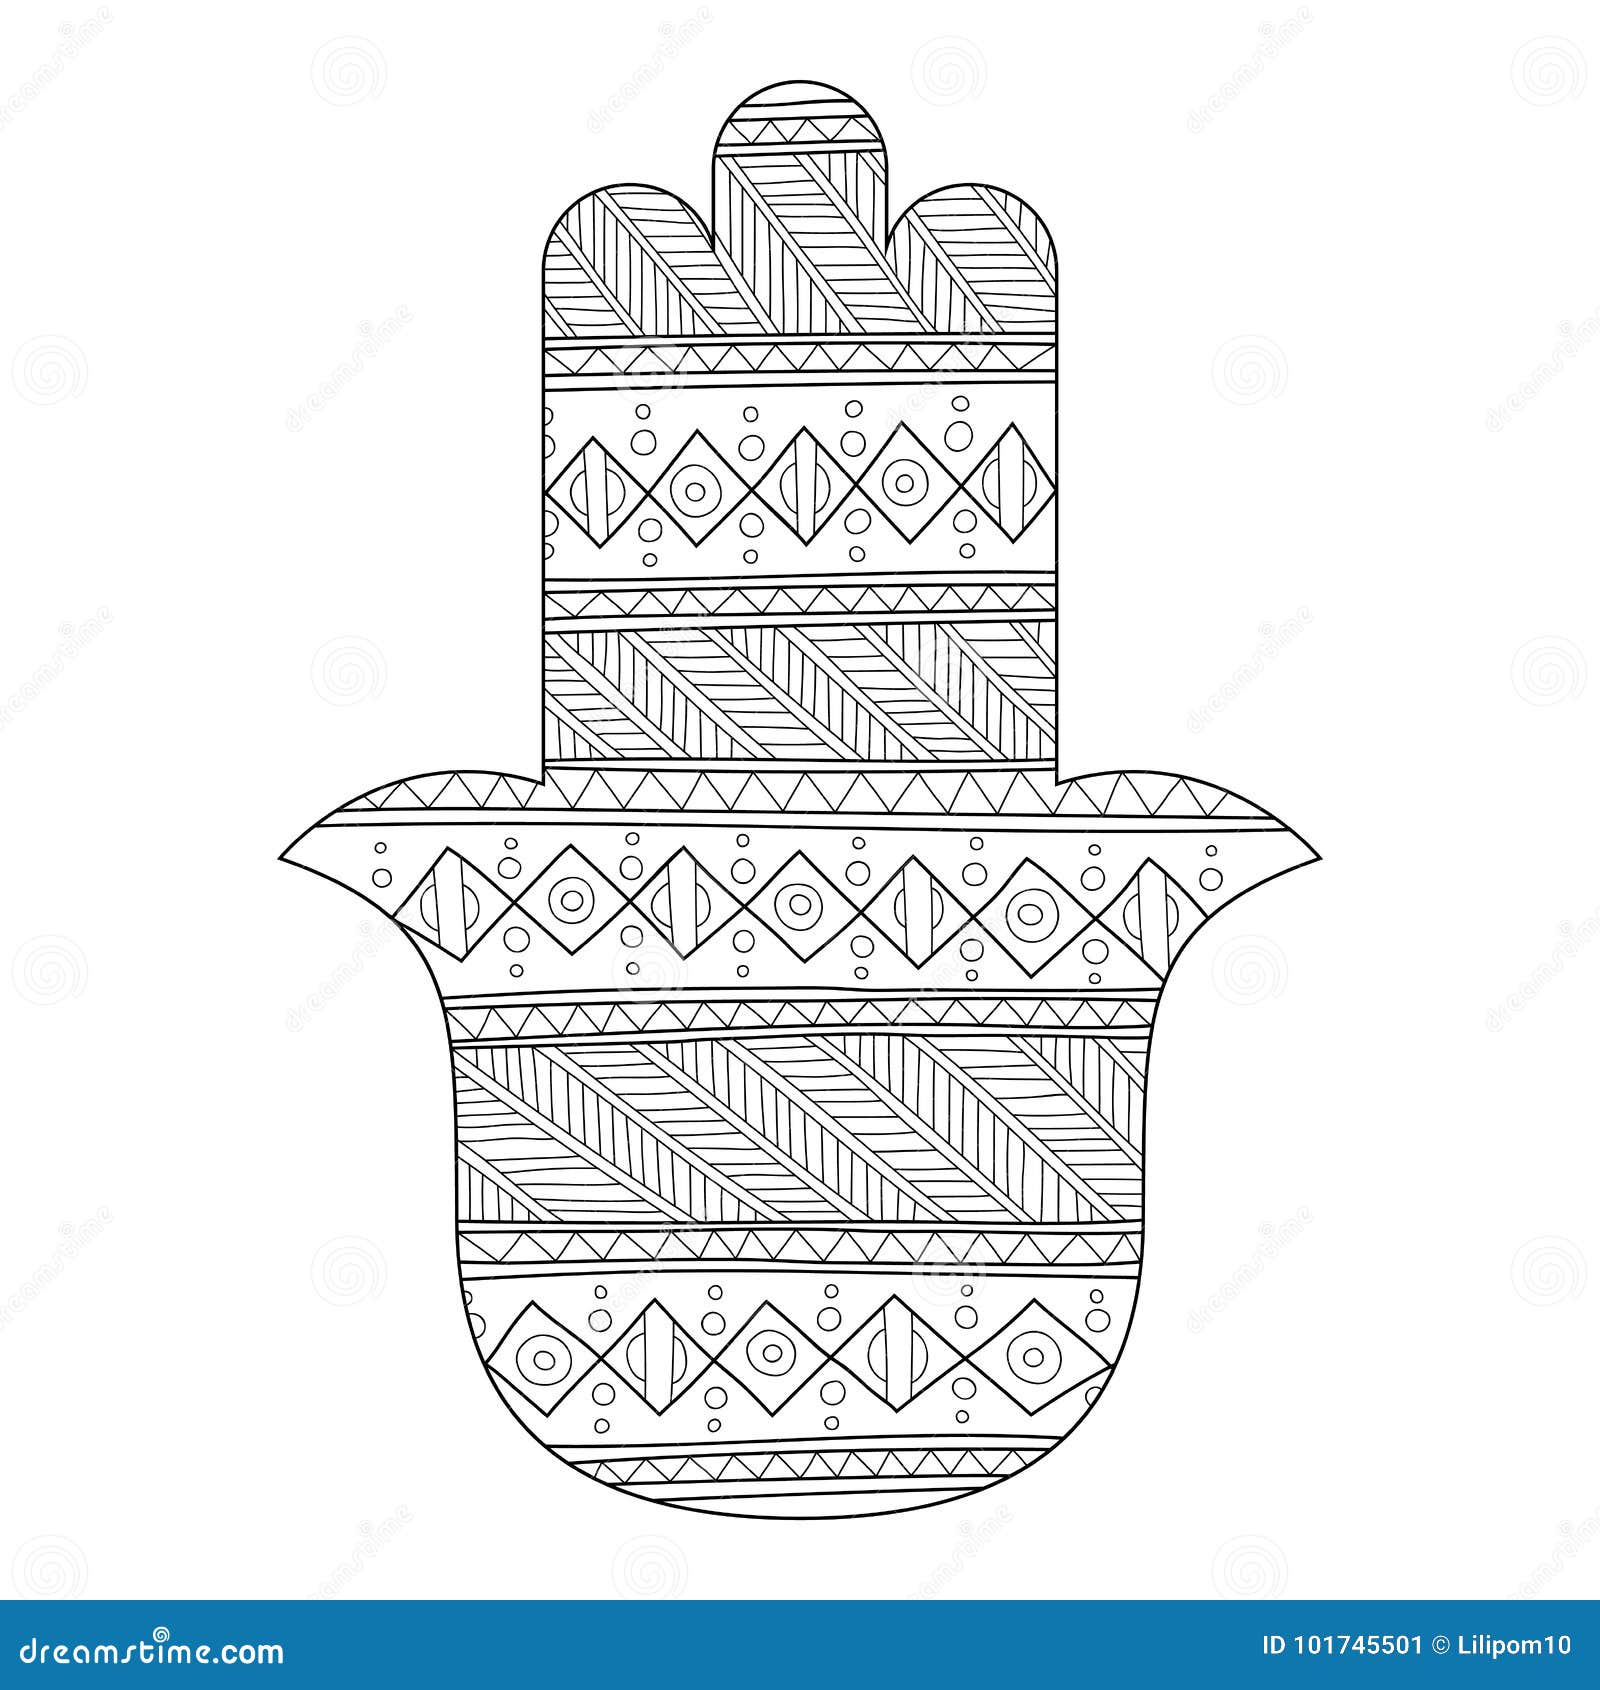 Hamsa Hand Drawn Symbol. Black and White Illustration for Coloring ...